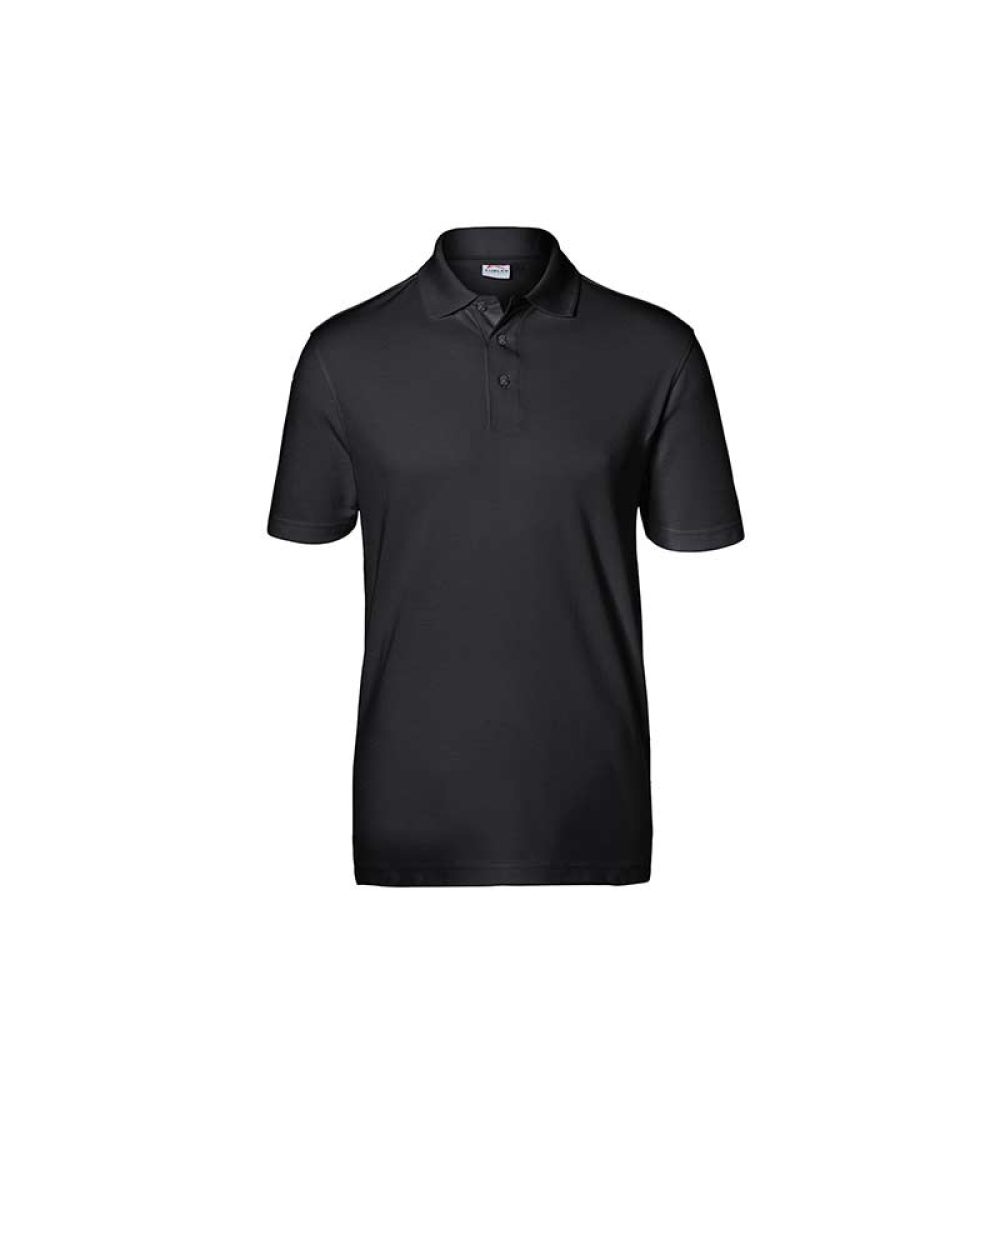 kuebler-poloshirt-shirts-5126-6239-99